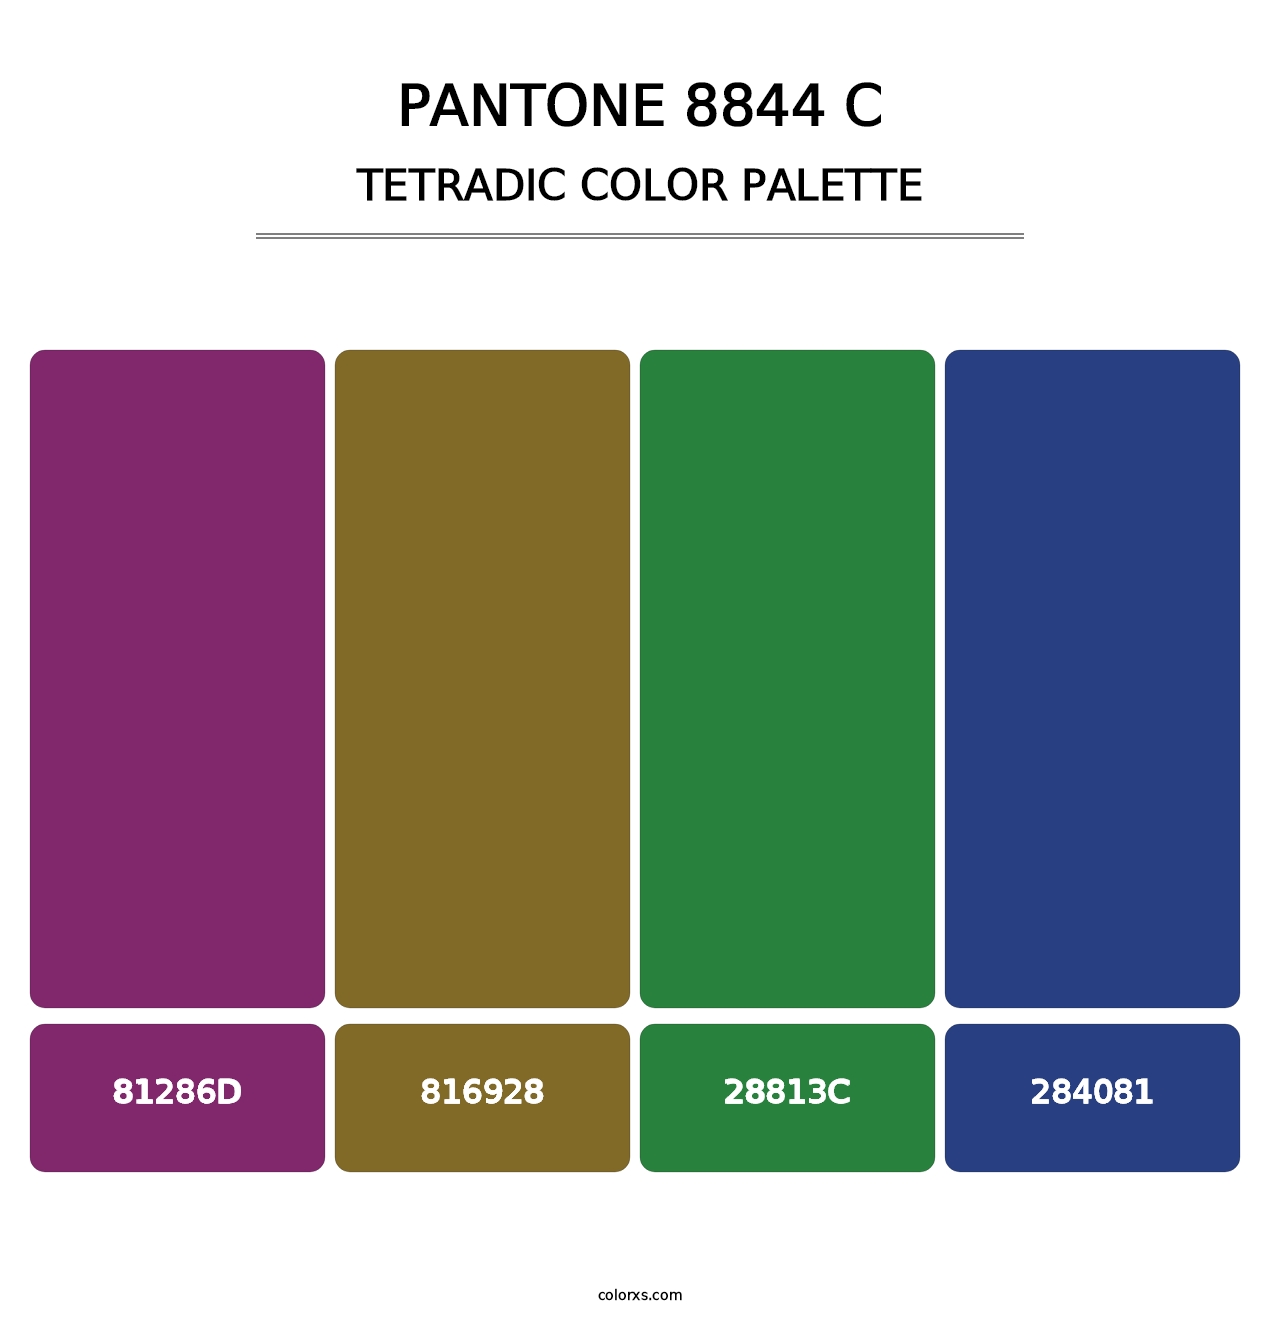 PANTONE 8844 C - Tetradic Color Palette